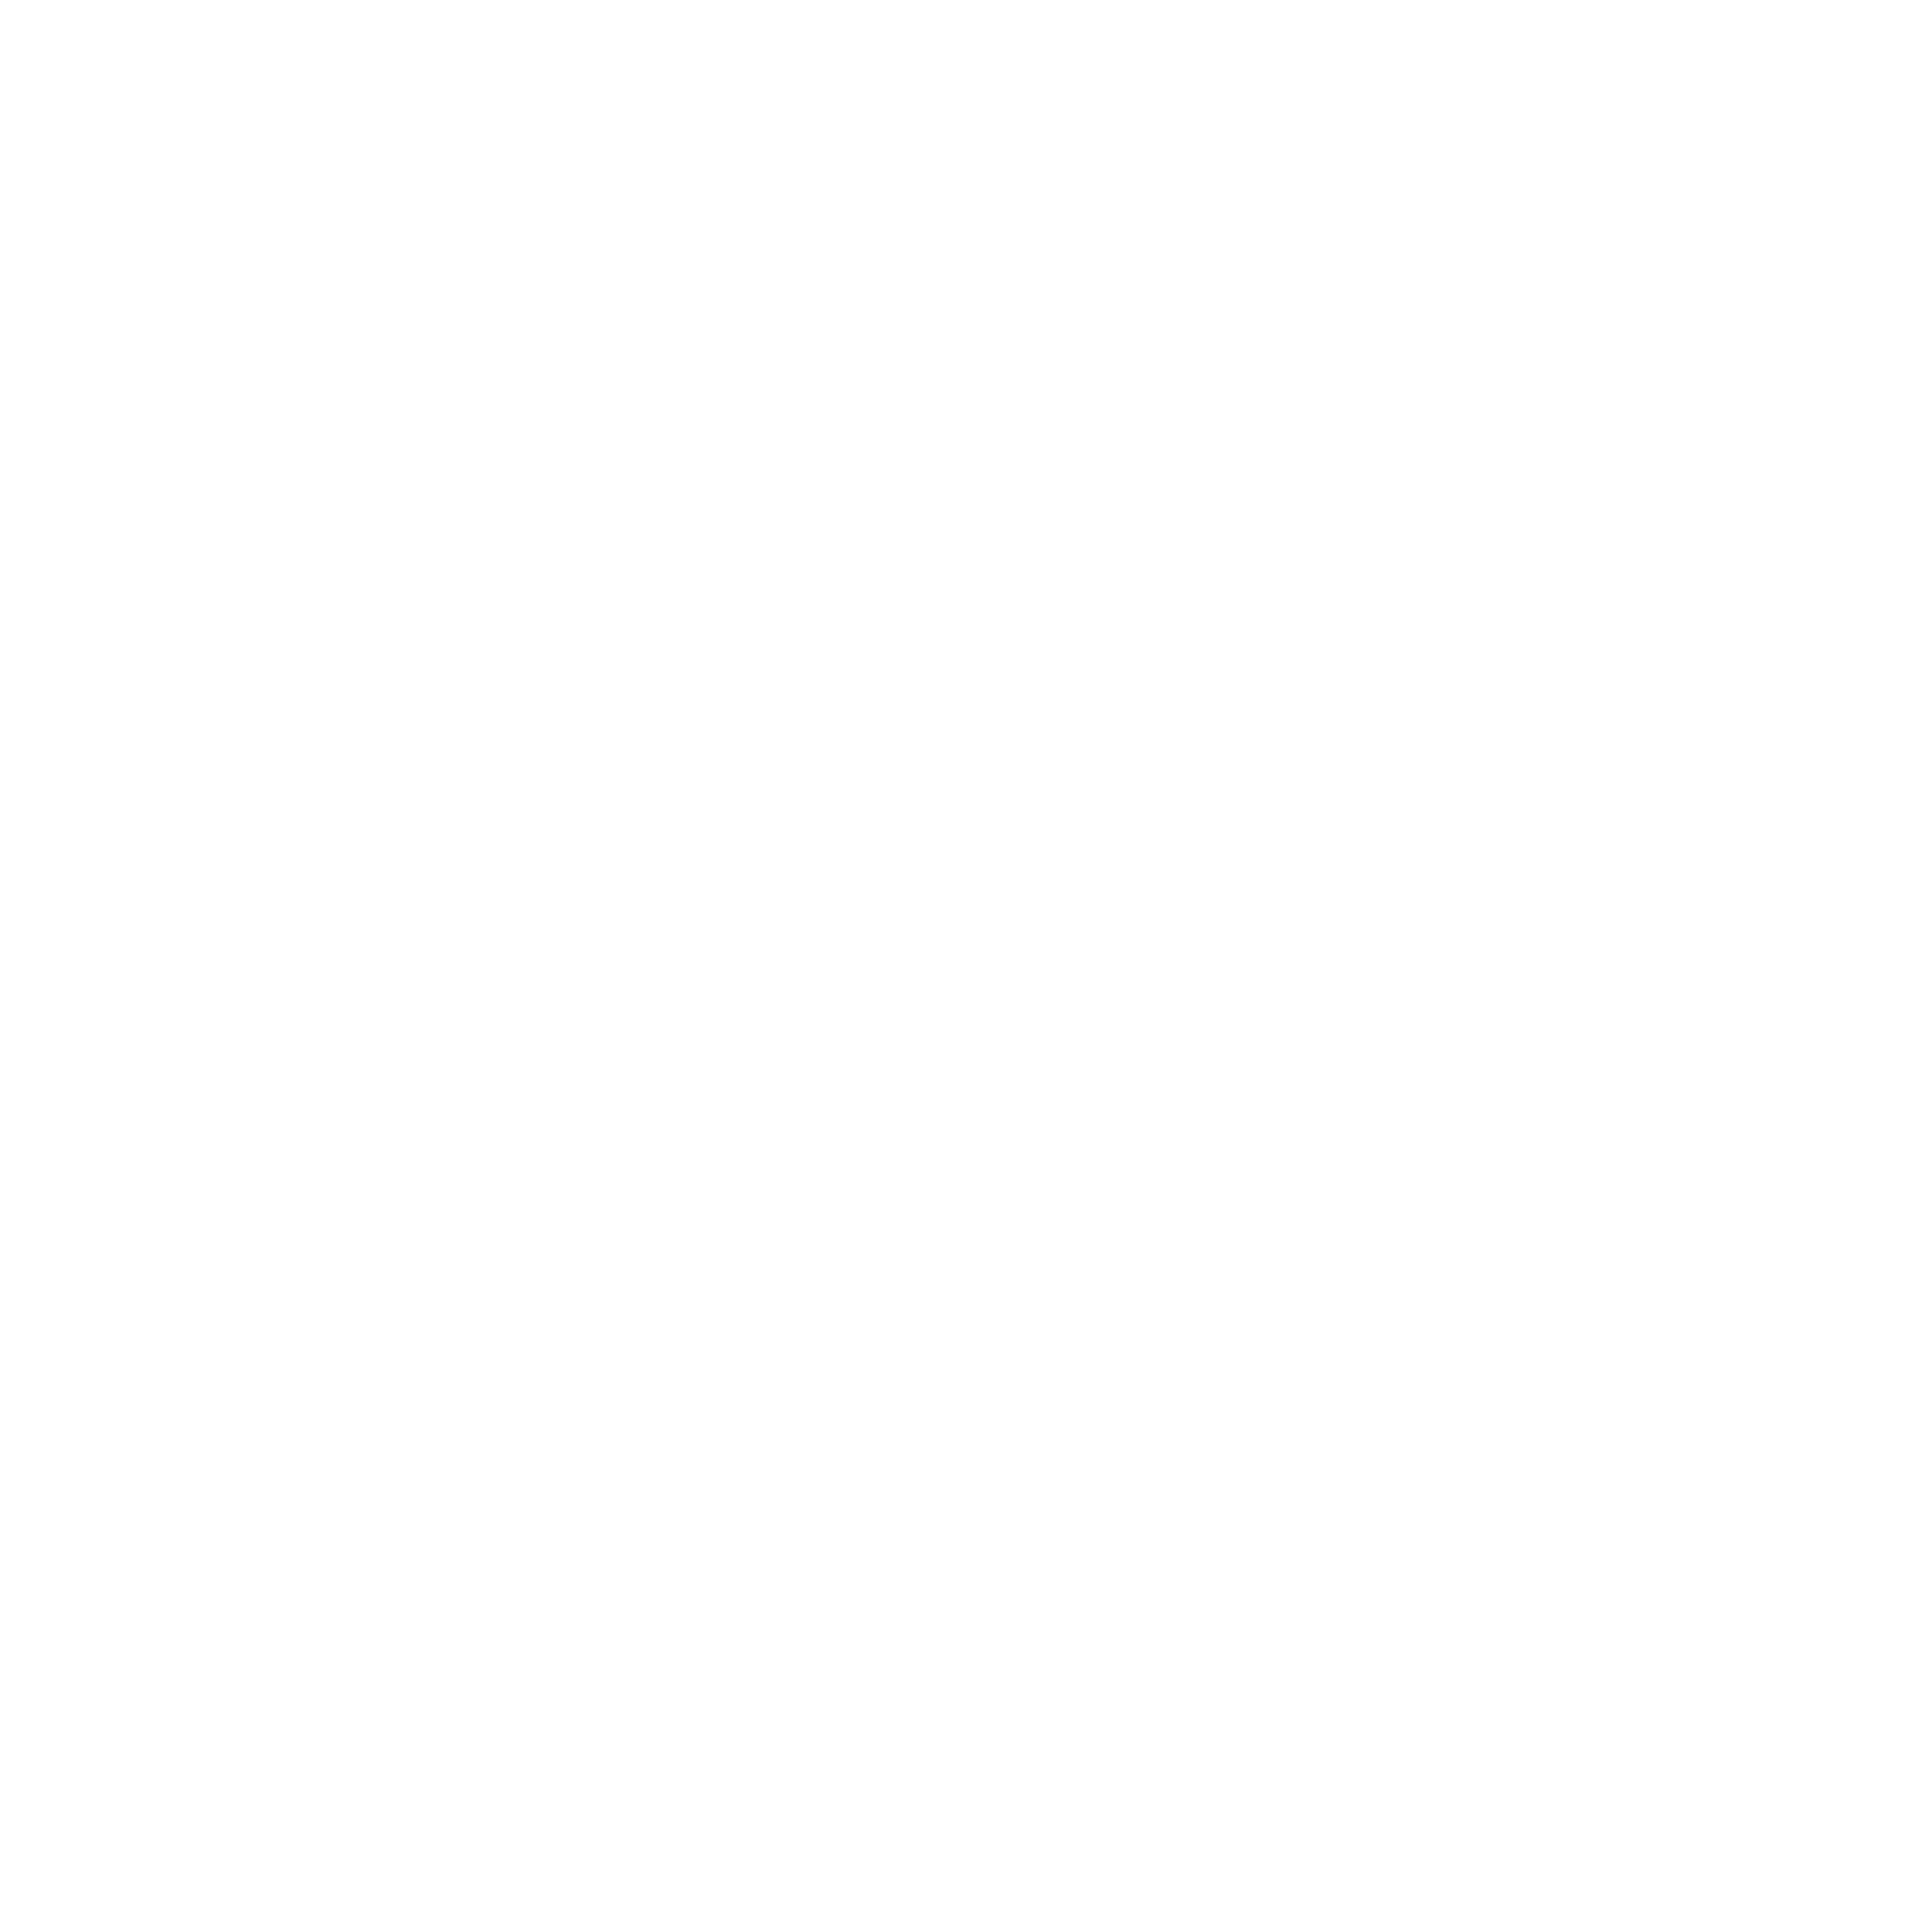 KRT Ostrava s.r.o. logo - bílé